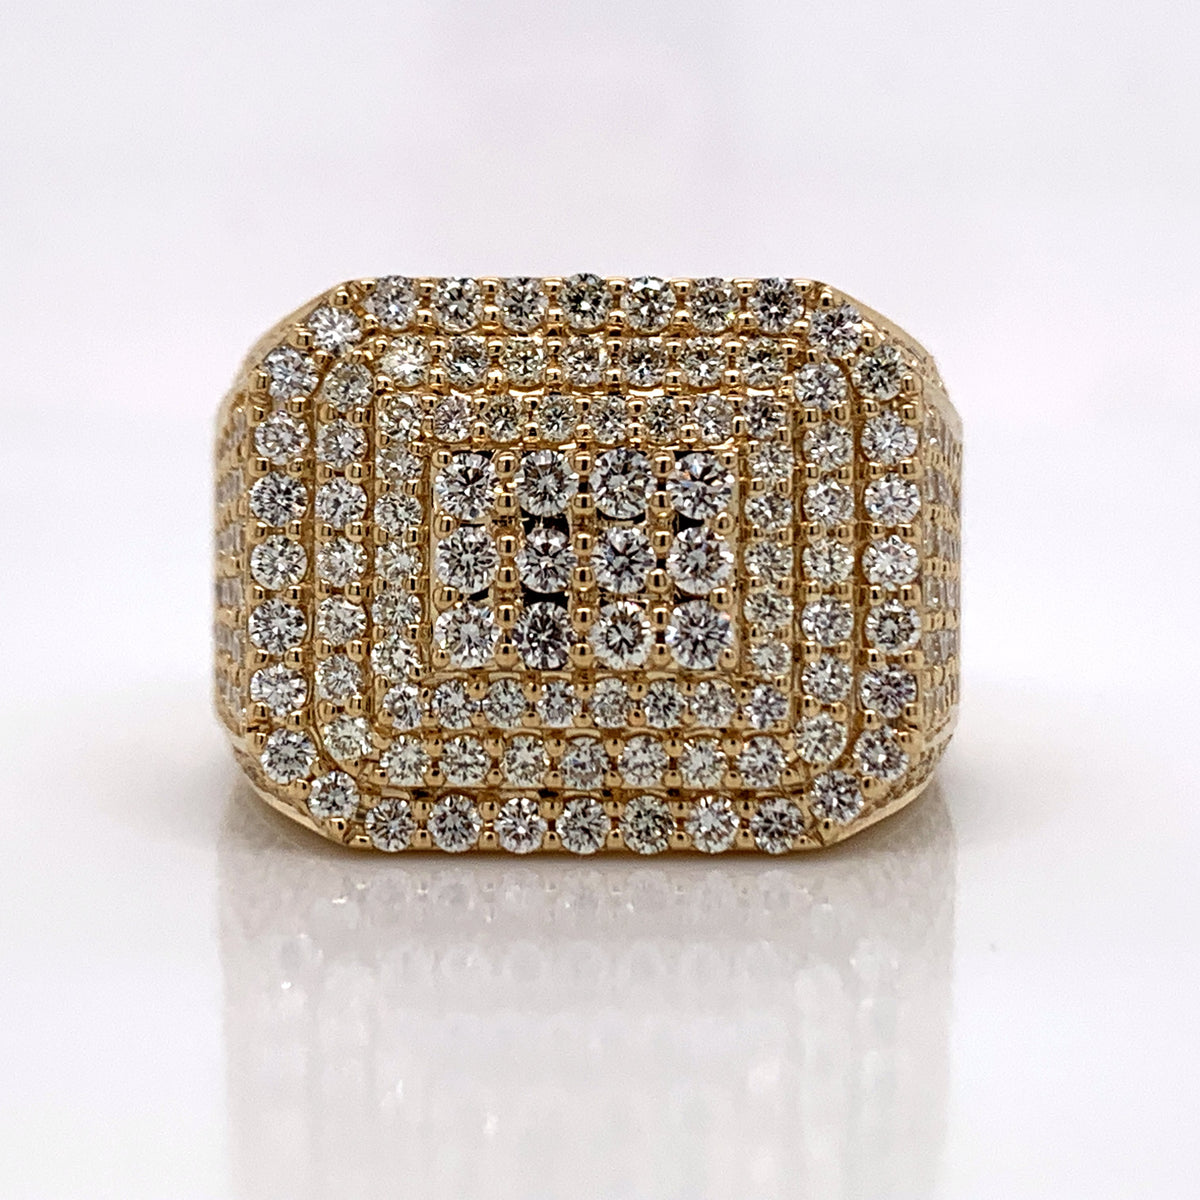 3.25 CT. Diamond Ring in 14K Gold - White Carat Diamonds 